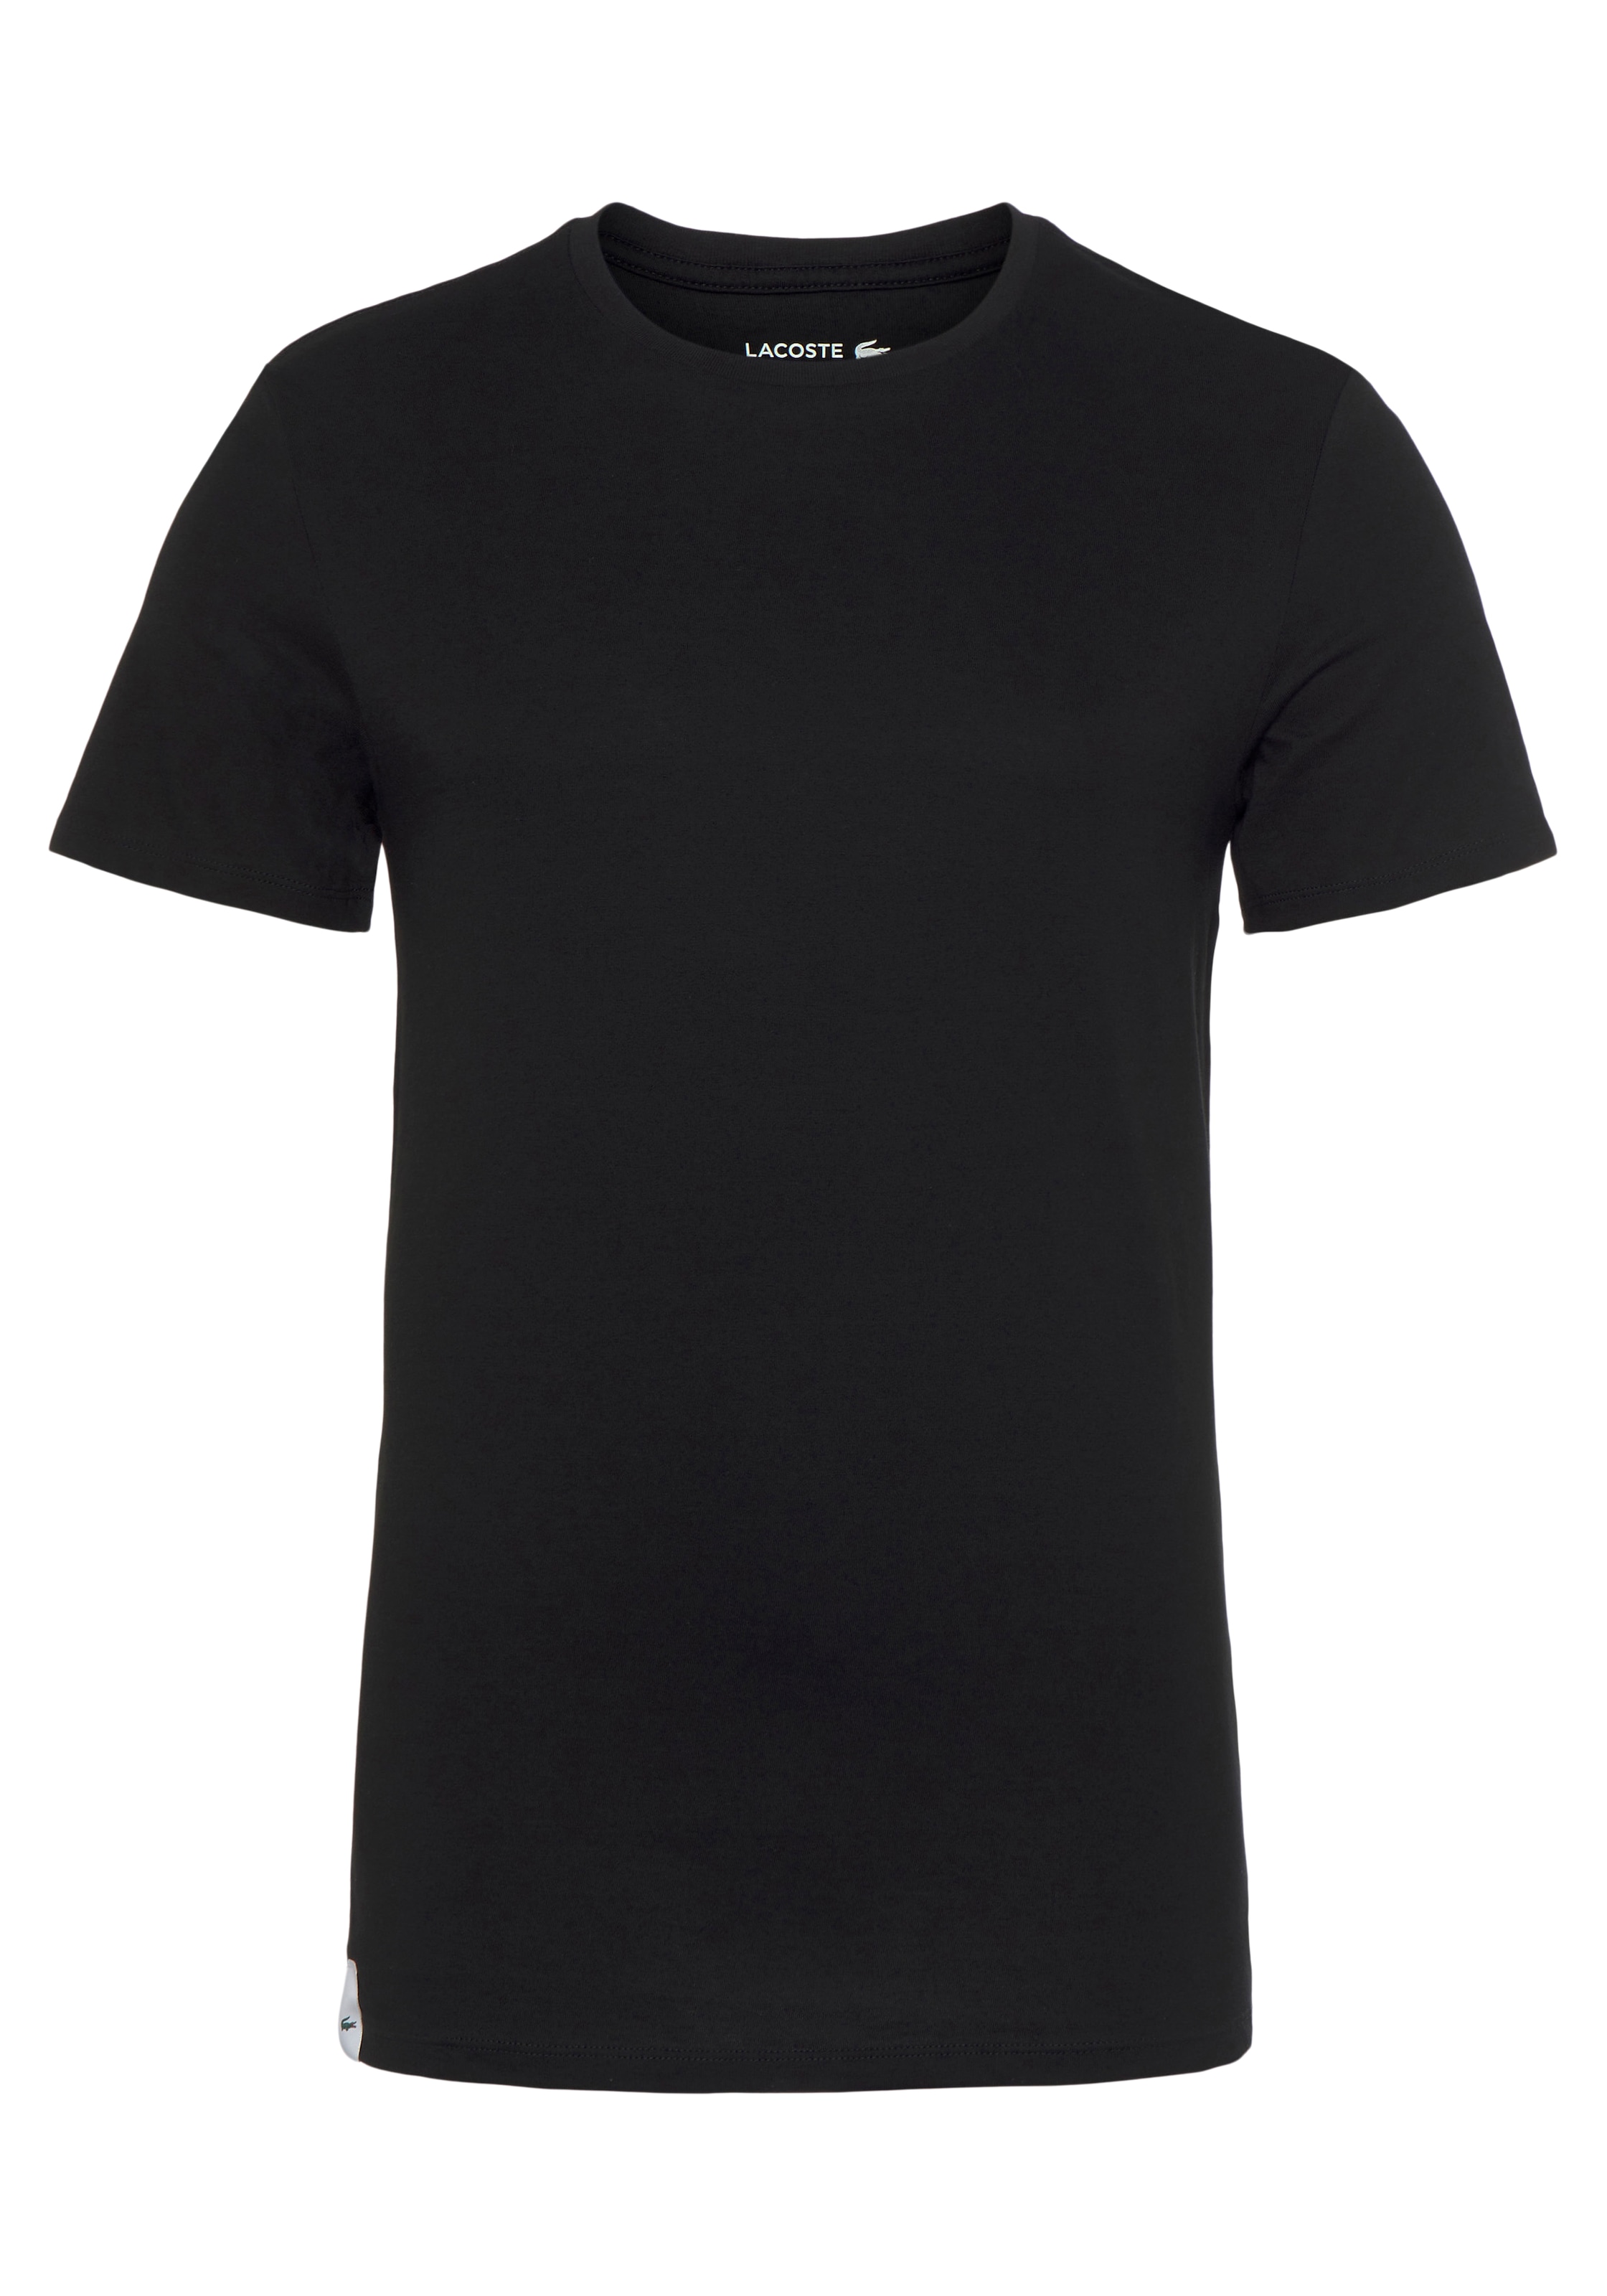 Lacoste T-Shirt, Atmungsaktives Baumwollmaterial für angenehmes Hautgefühl